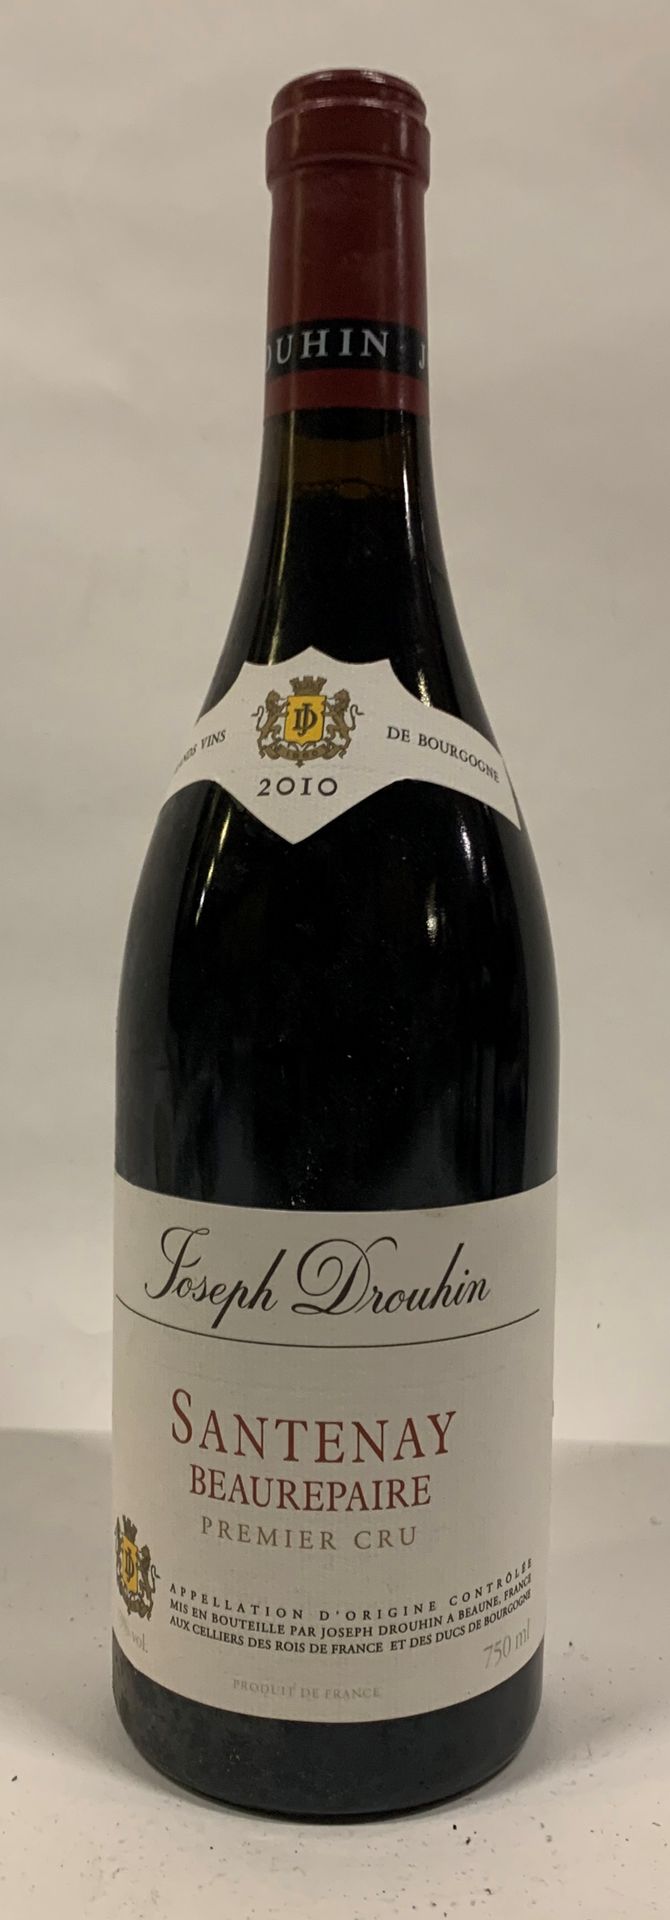 Null ● SANTENAY Premier Cru | Beaurepaire, Joseph Drouhin, 2010

12 bouteilles

&hellip;